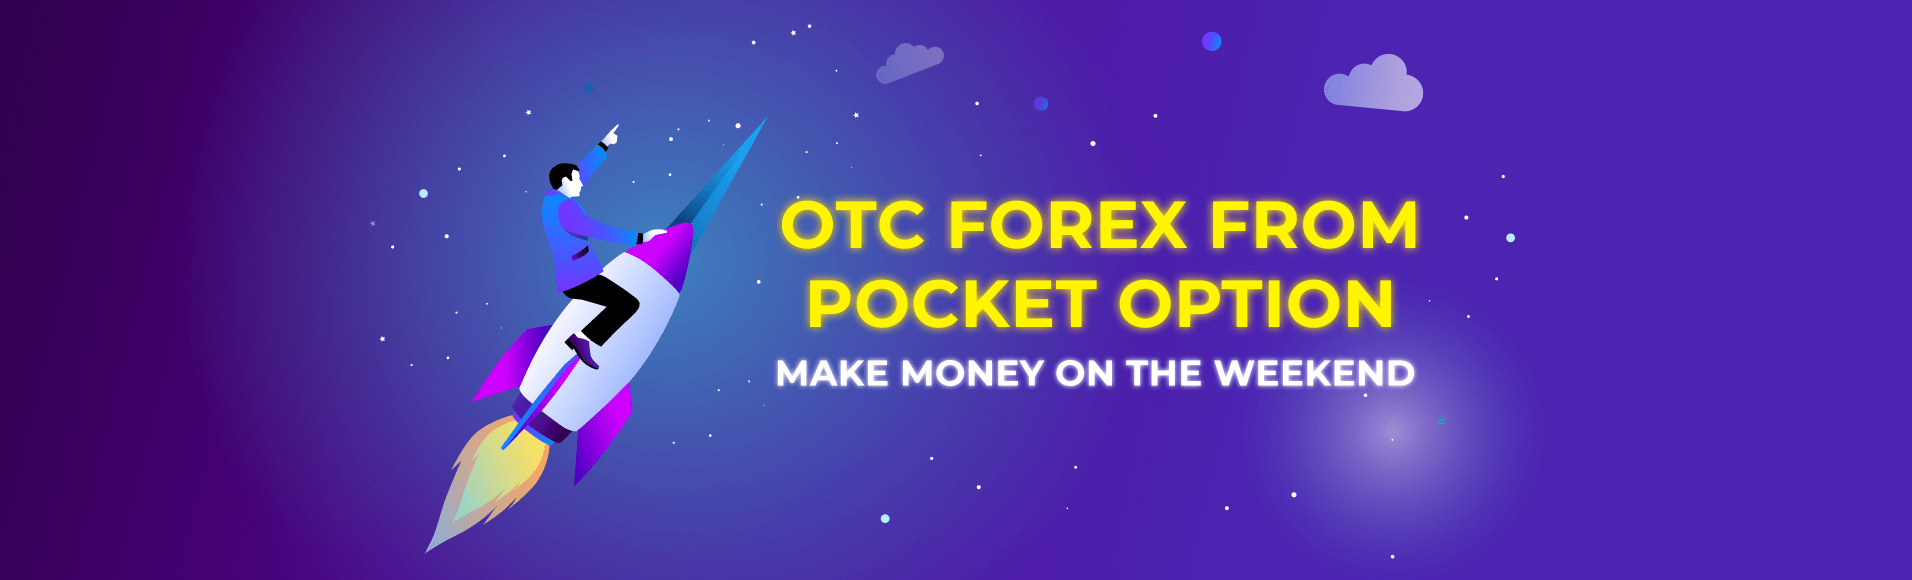 OTC Forex từ Pocket Option - kiếm tiền vào cuối tuần